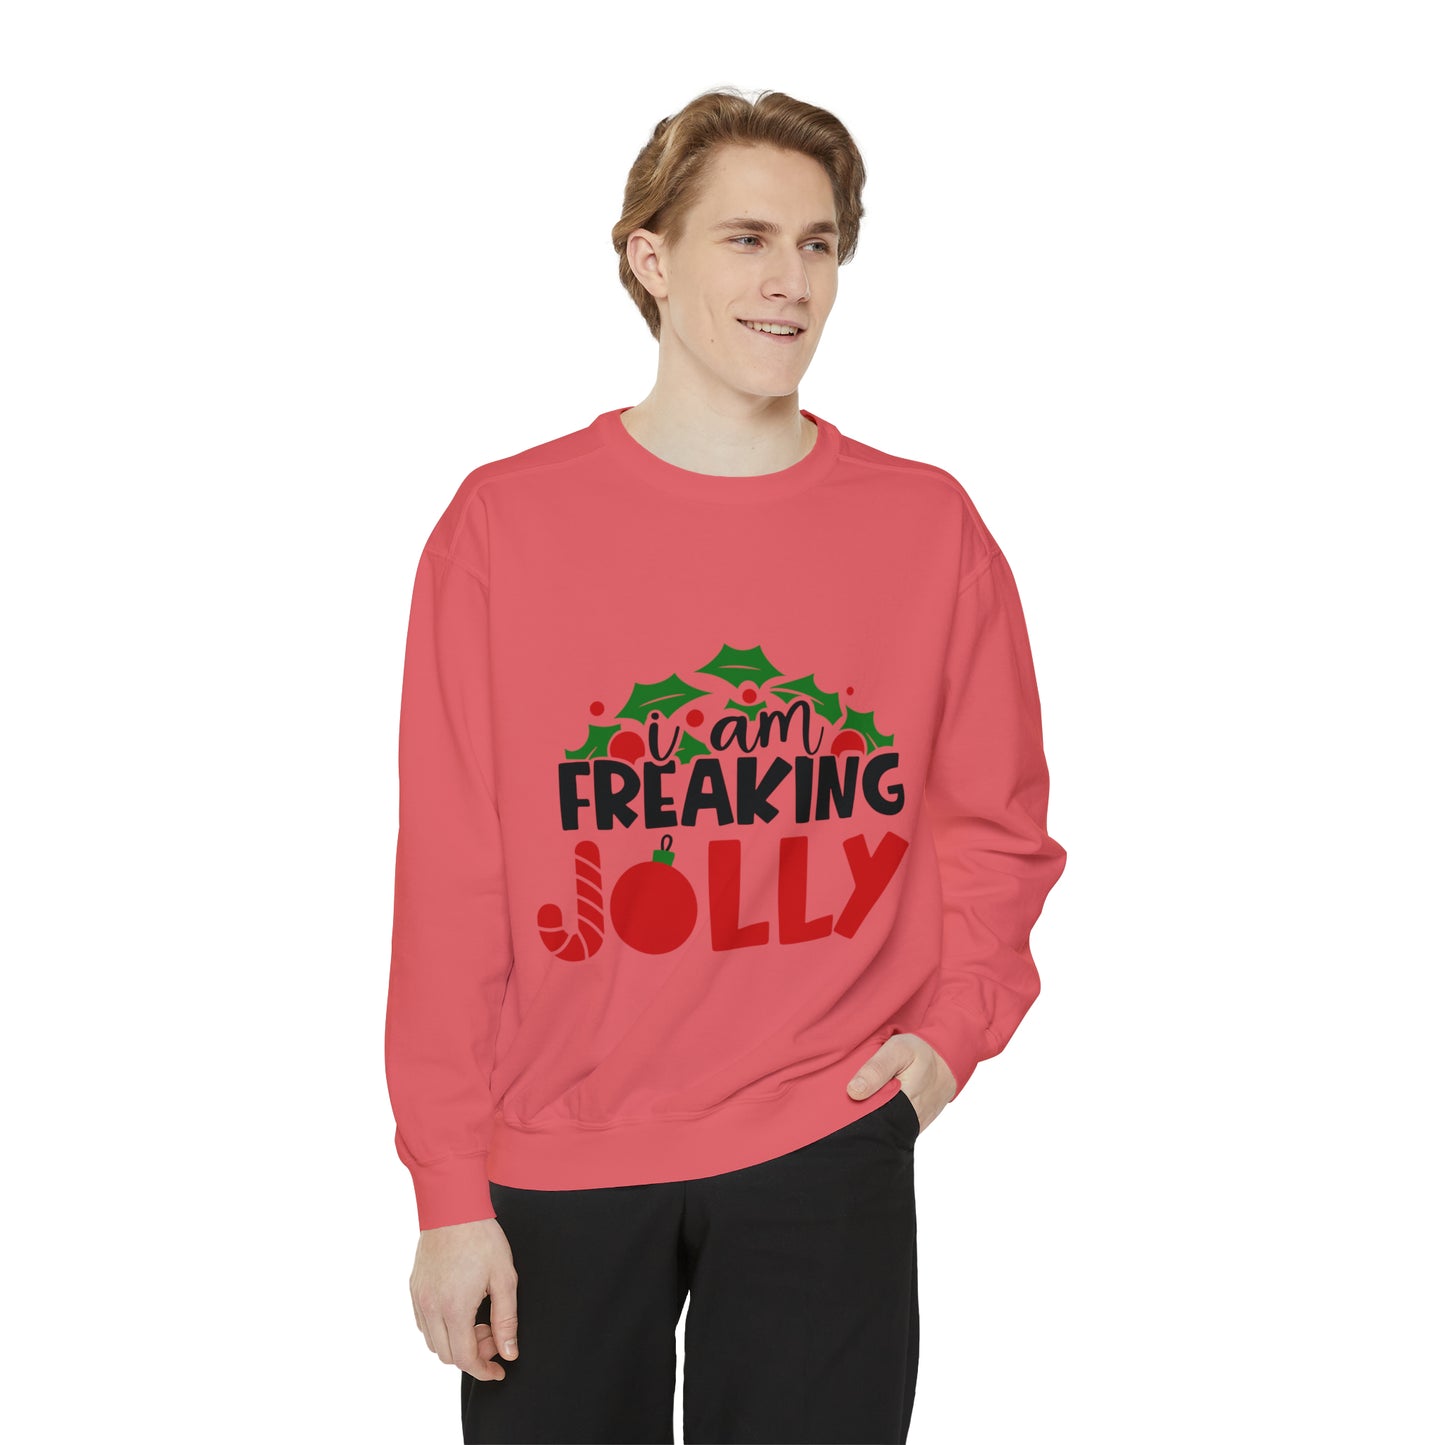 I Am Freaking Jolly Unisex Garment-Dyed Sweatshirt